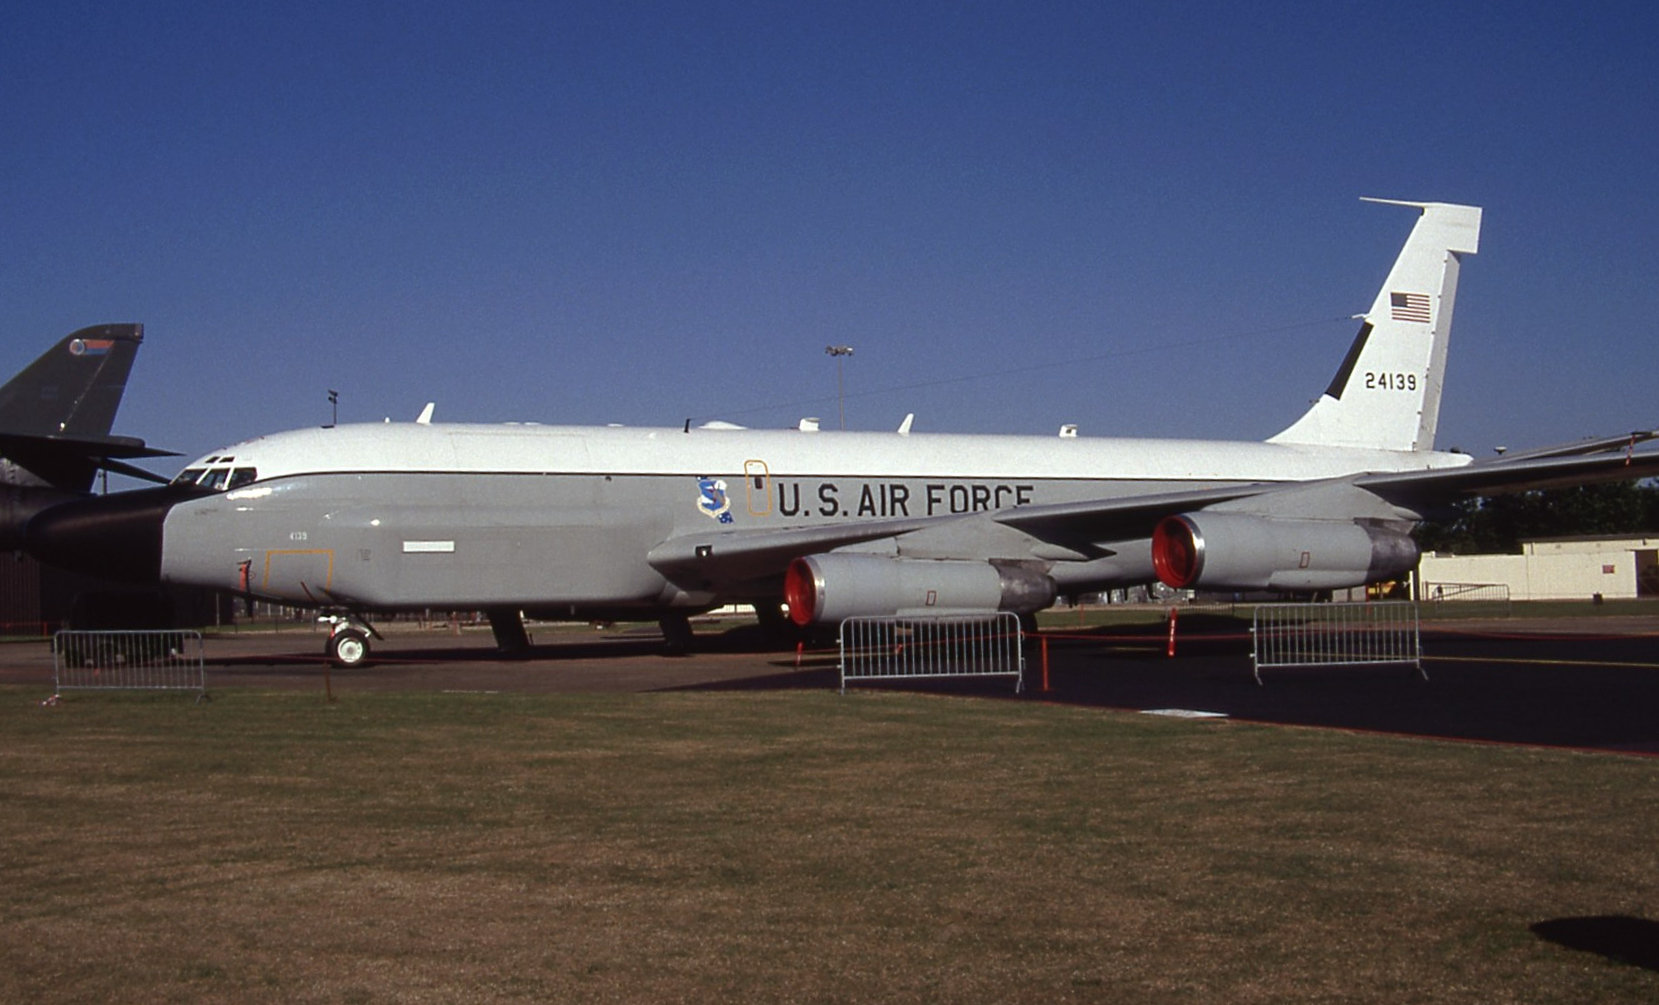 62-4139/624139 USAF - United States Air Force Boeing C-135 Stratotanker Airframe Information - AVSpotters.com